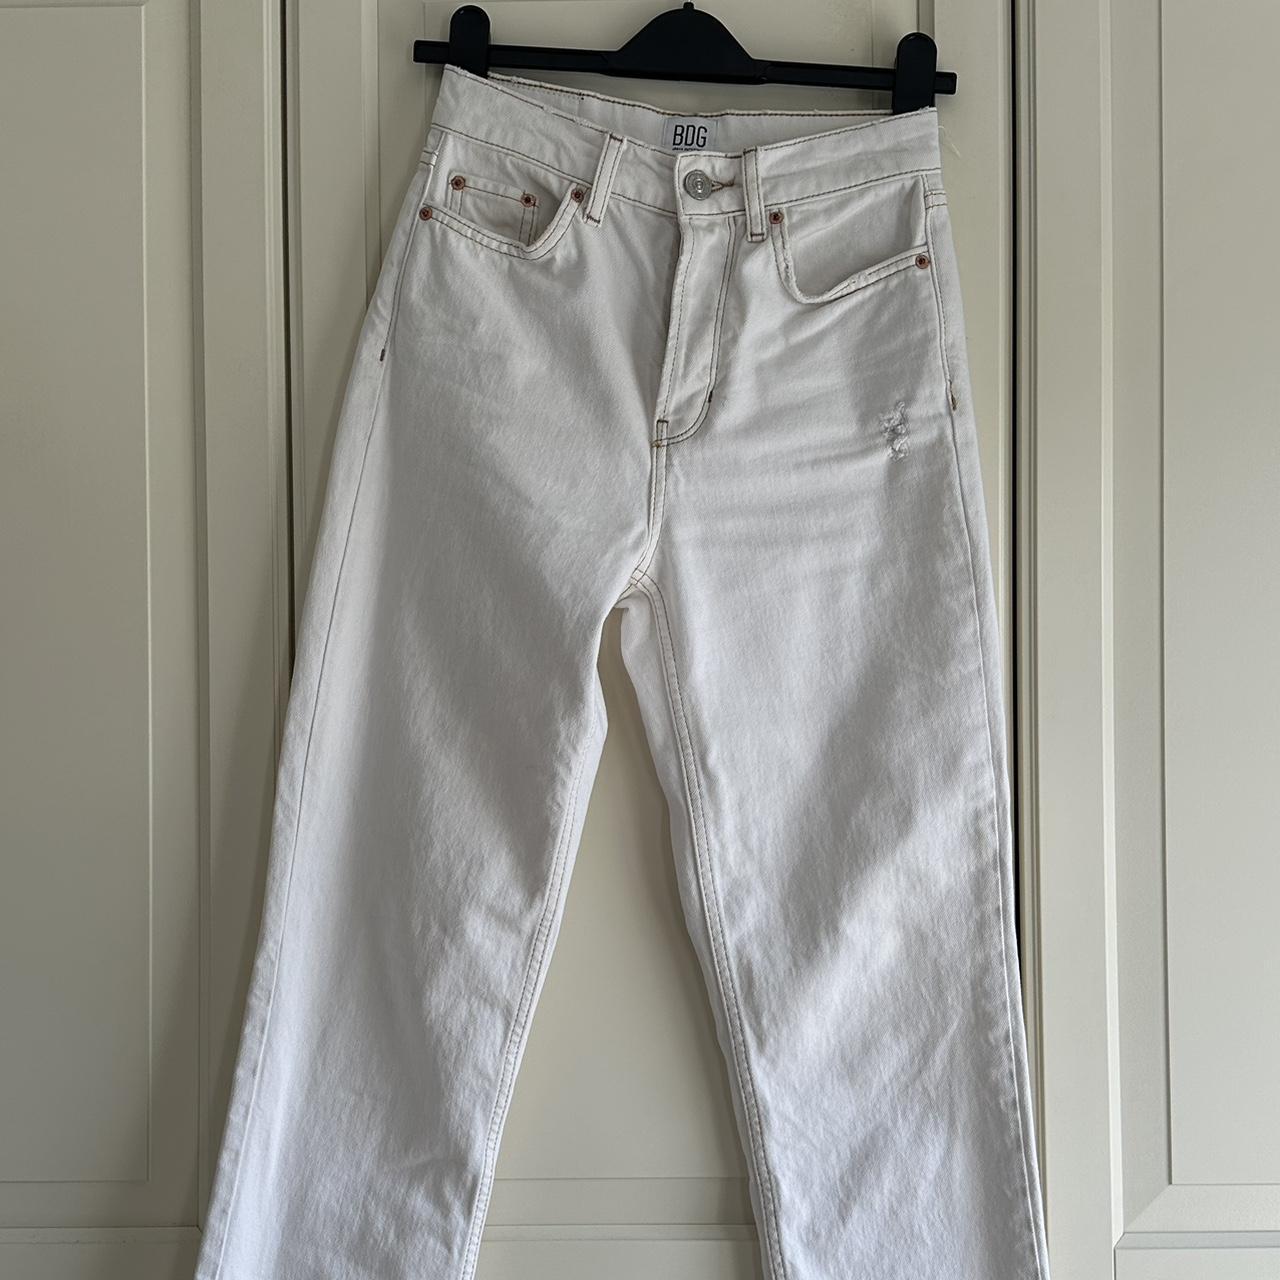 BDG pax jeans. The perfect white jean !! W26 L32 -... - Depop